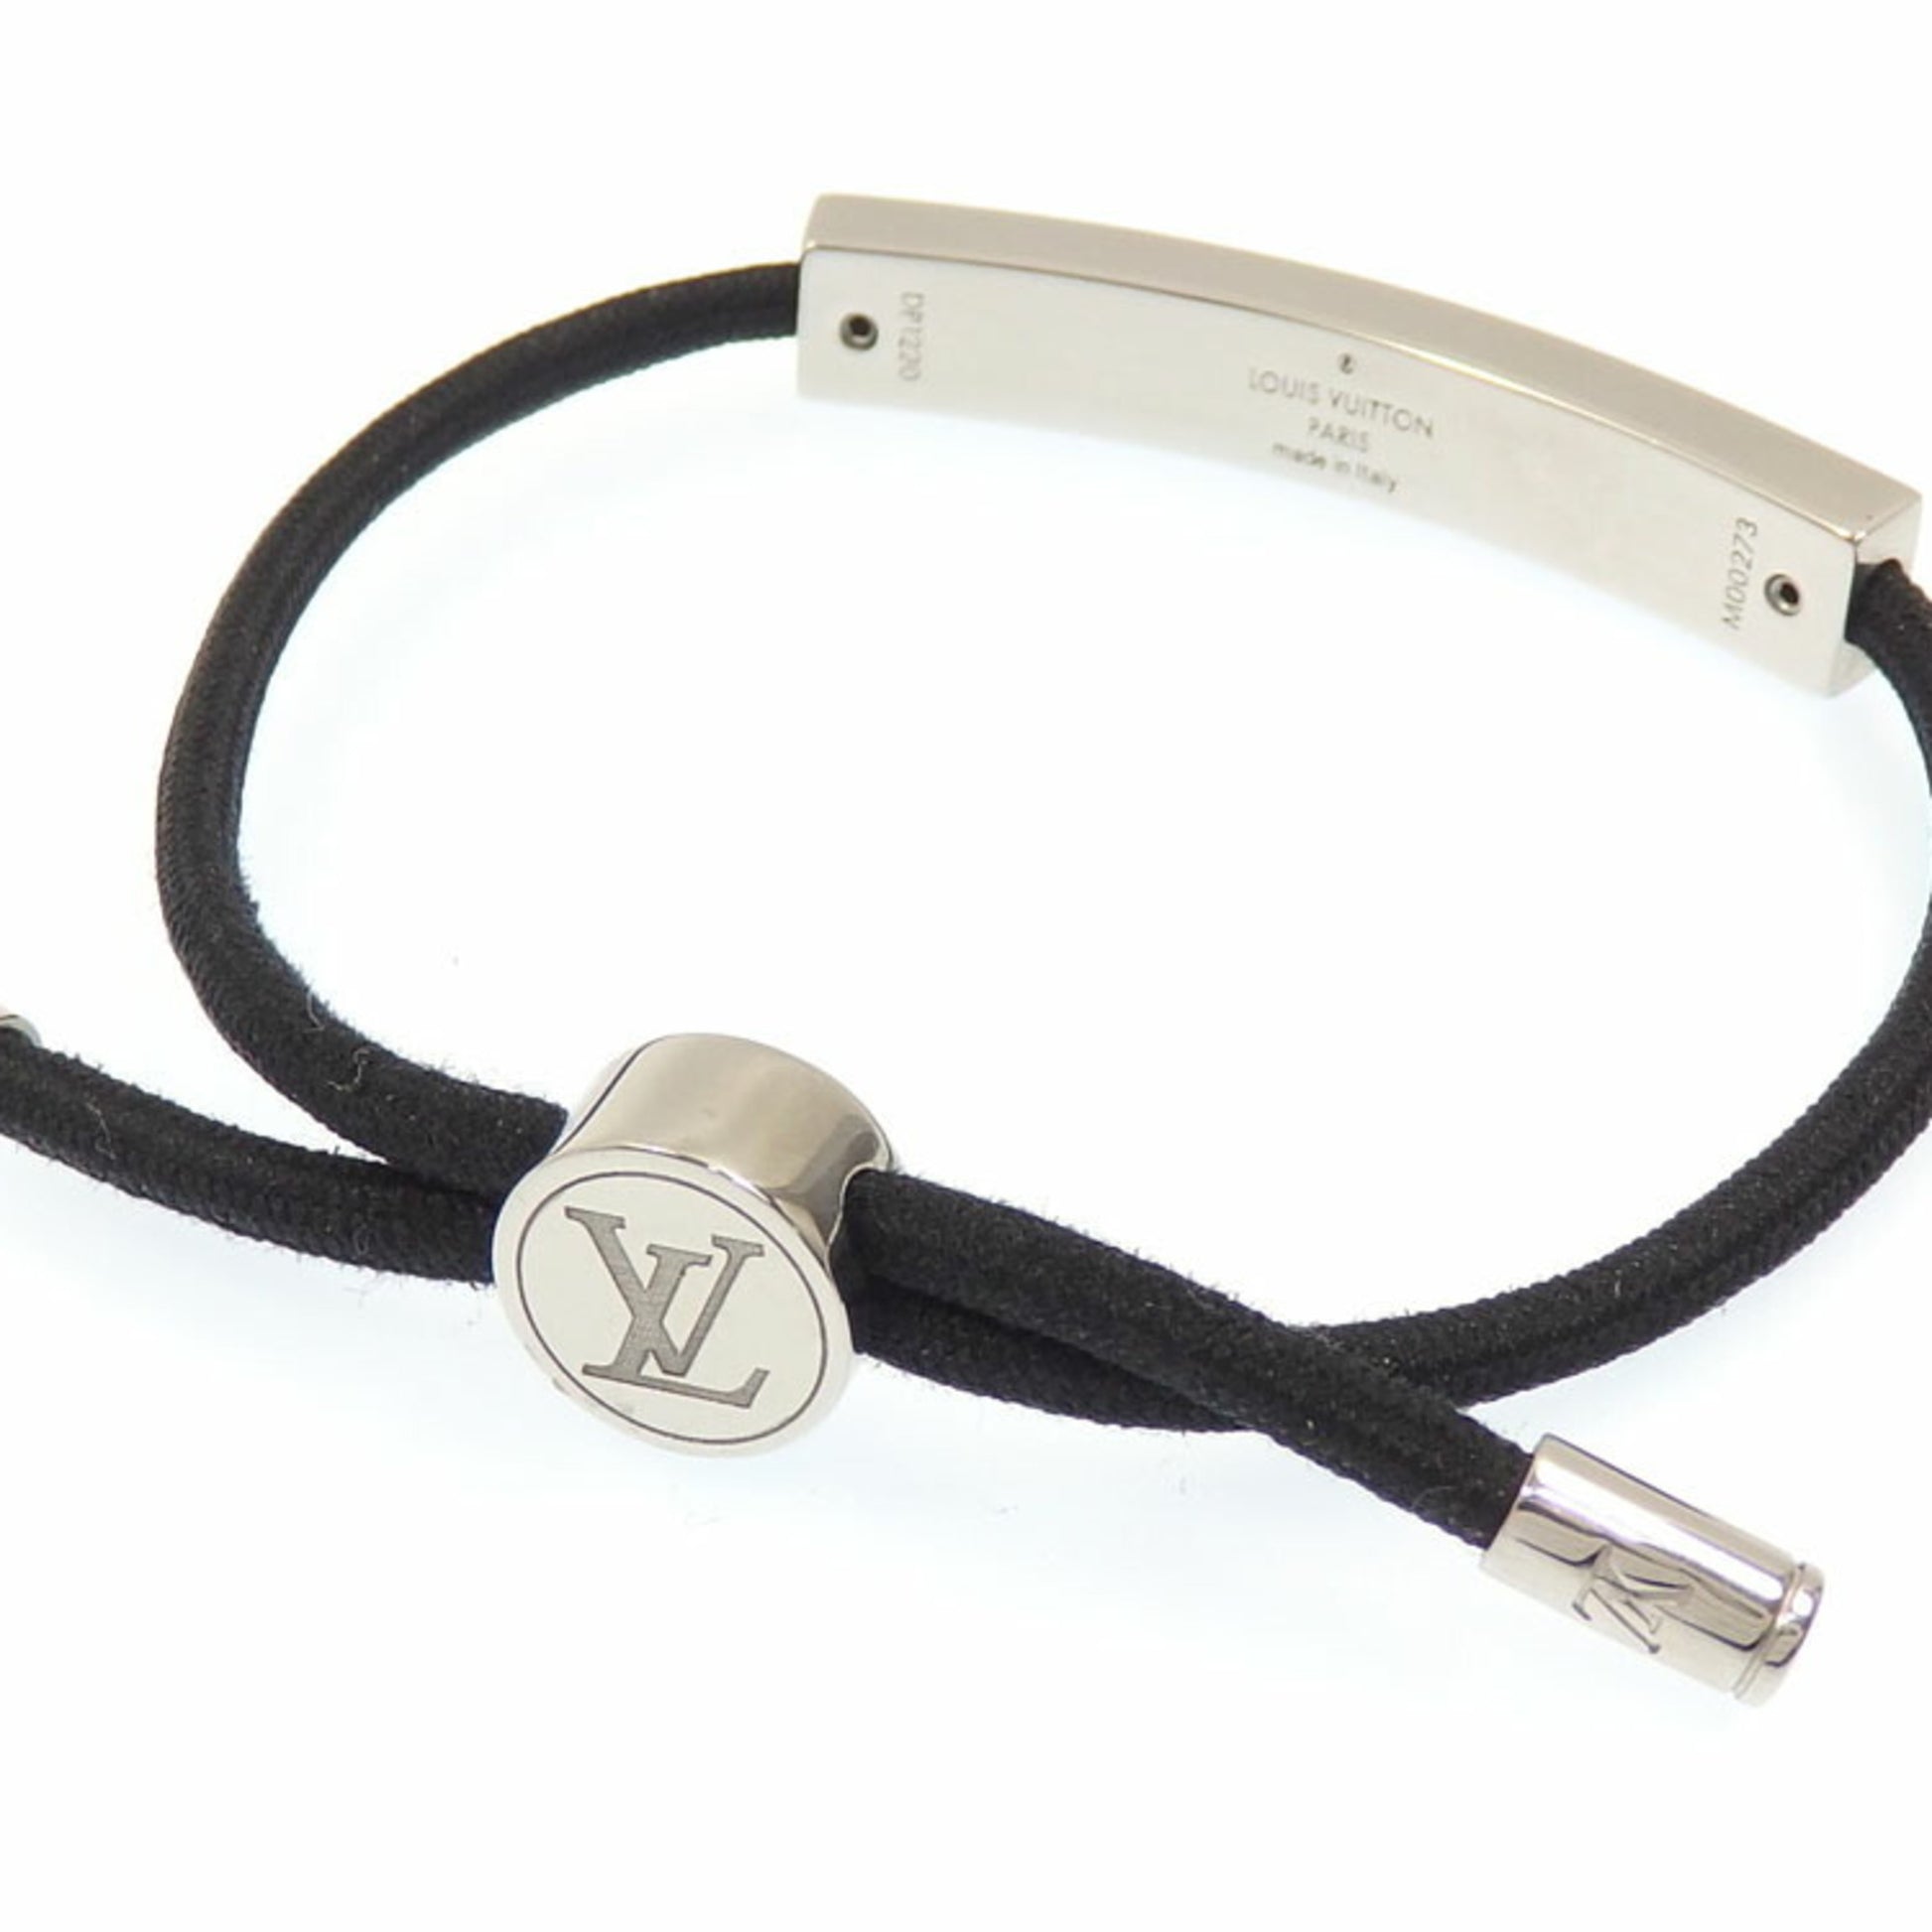 Louis Vuitton Brasley LV Space Bracelet